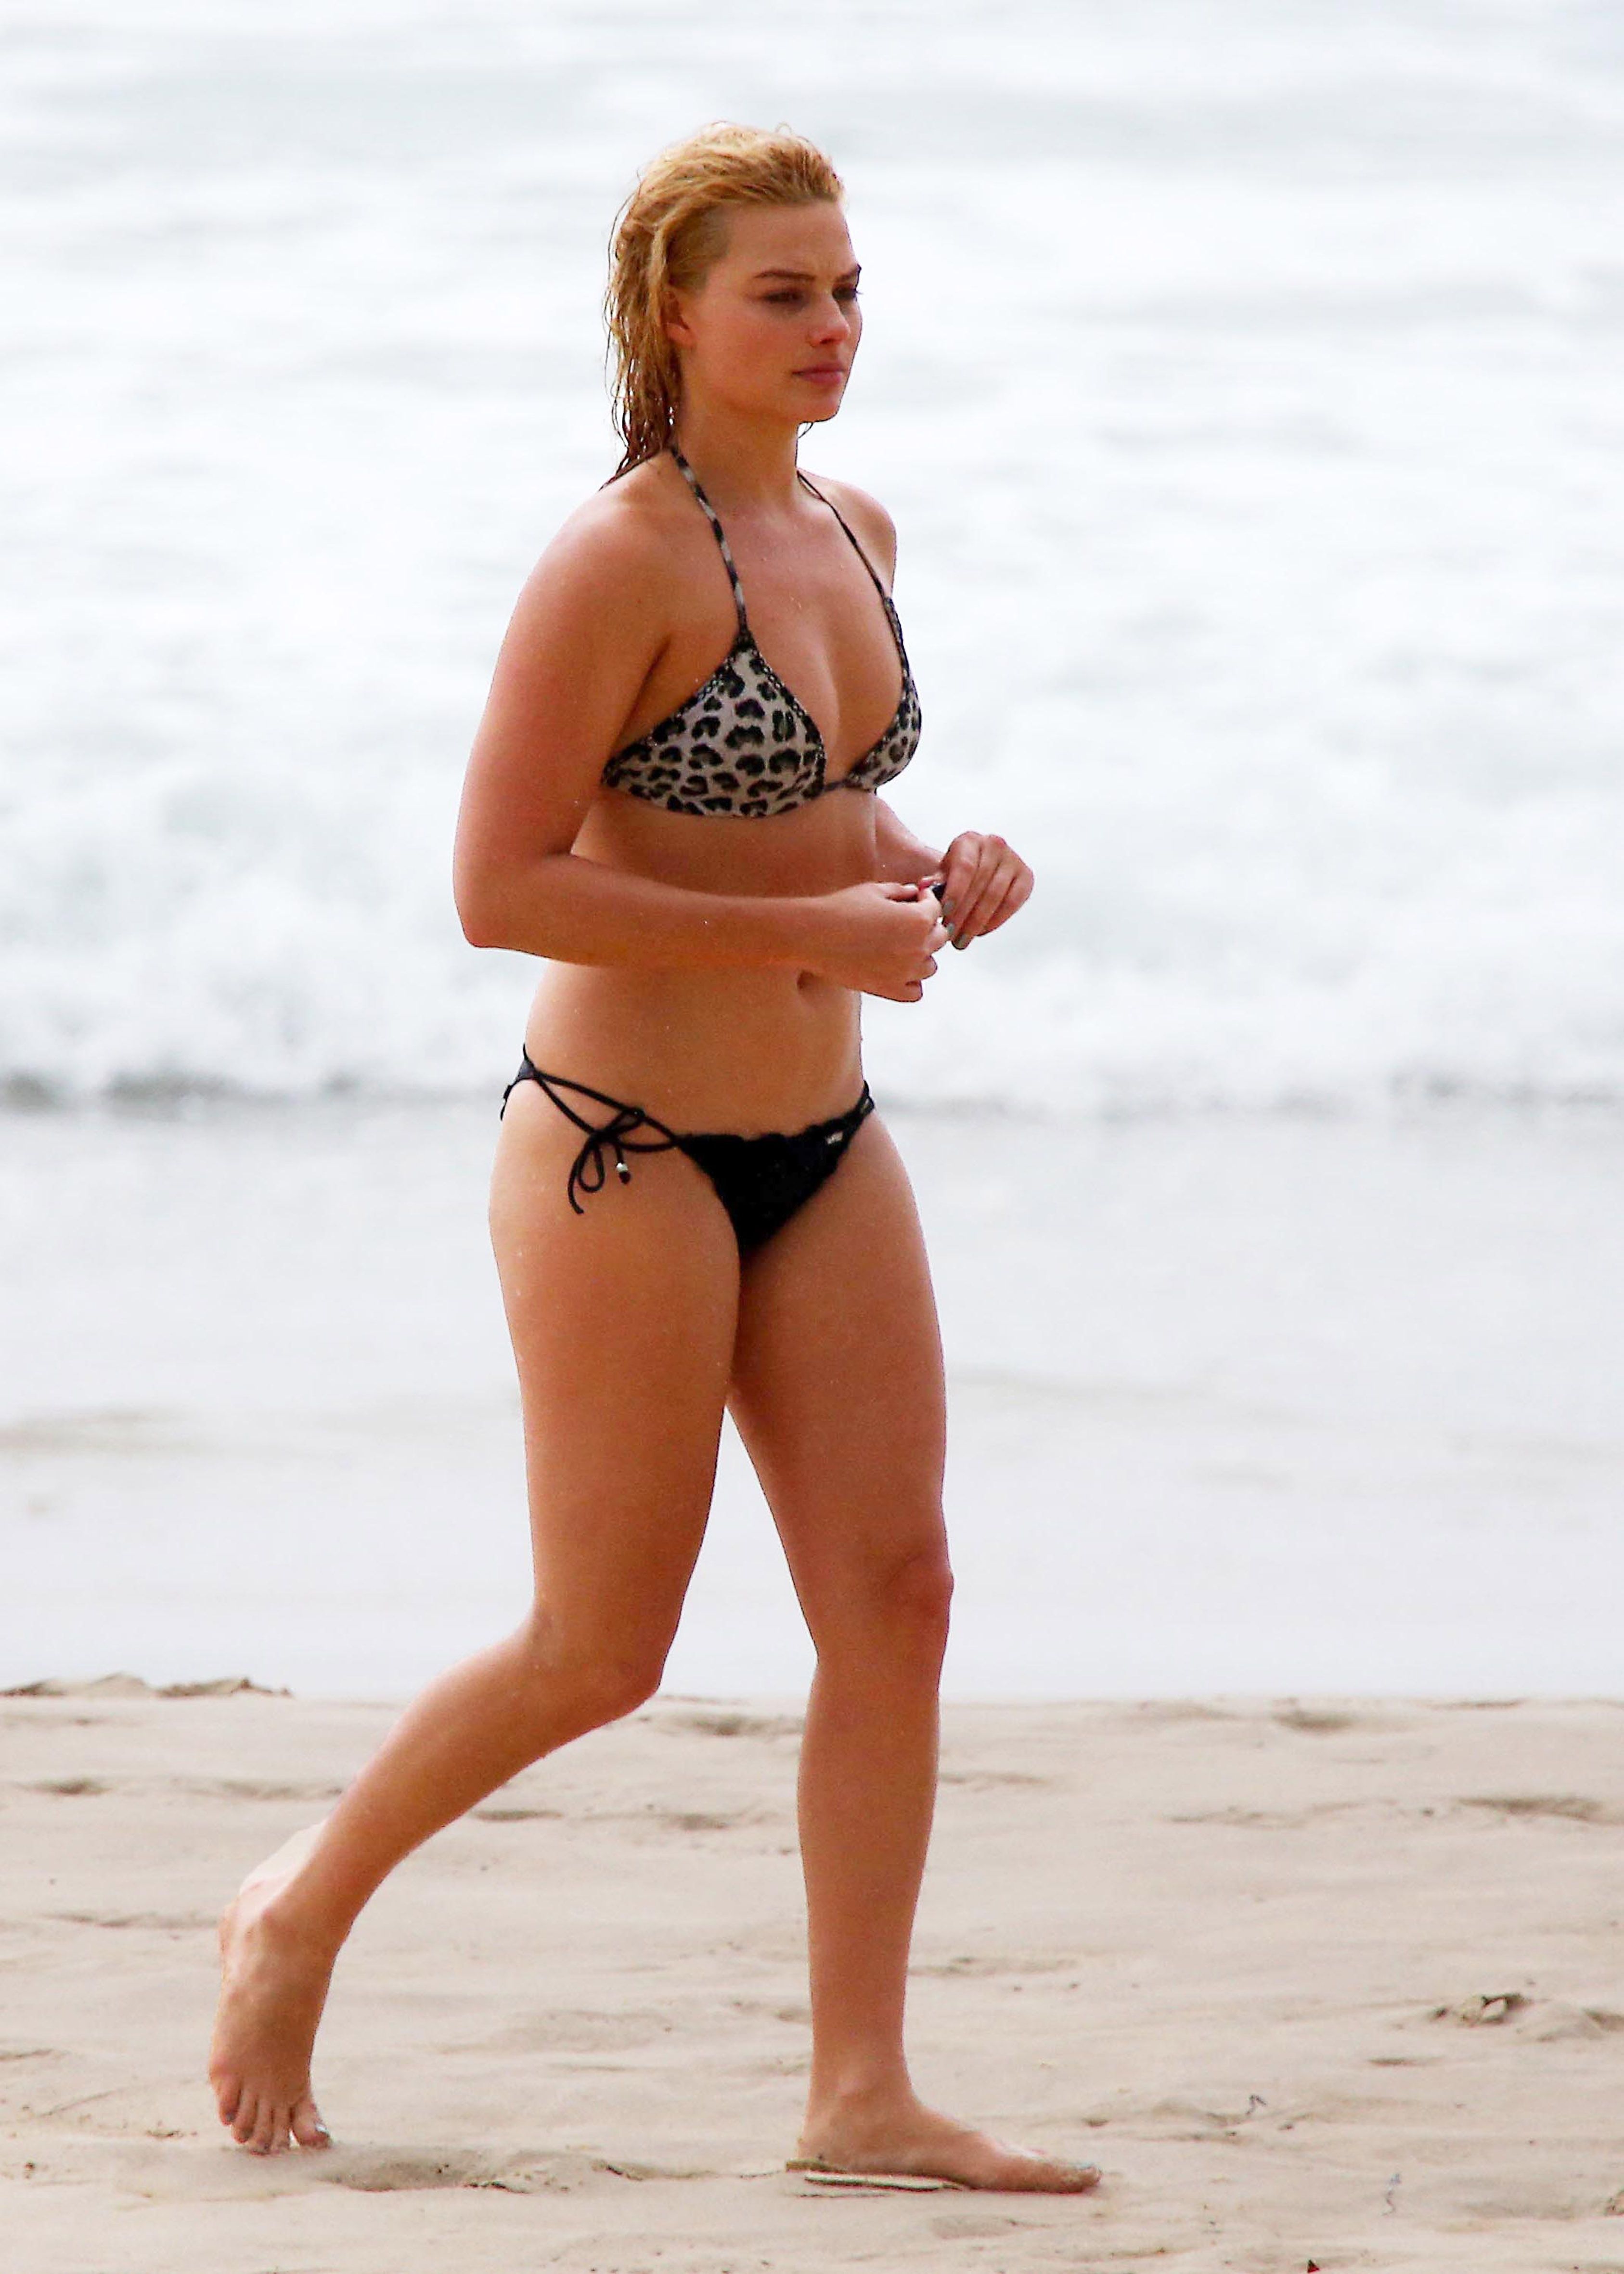 Margot_Robbie_wearing_sexy_bikini_at_a_beach_in_Byron_Bay_79x_HQ_18.jpg